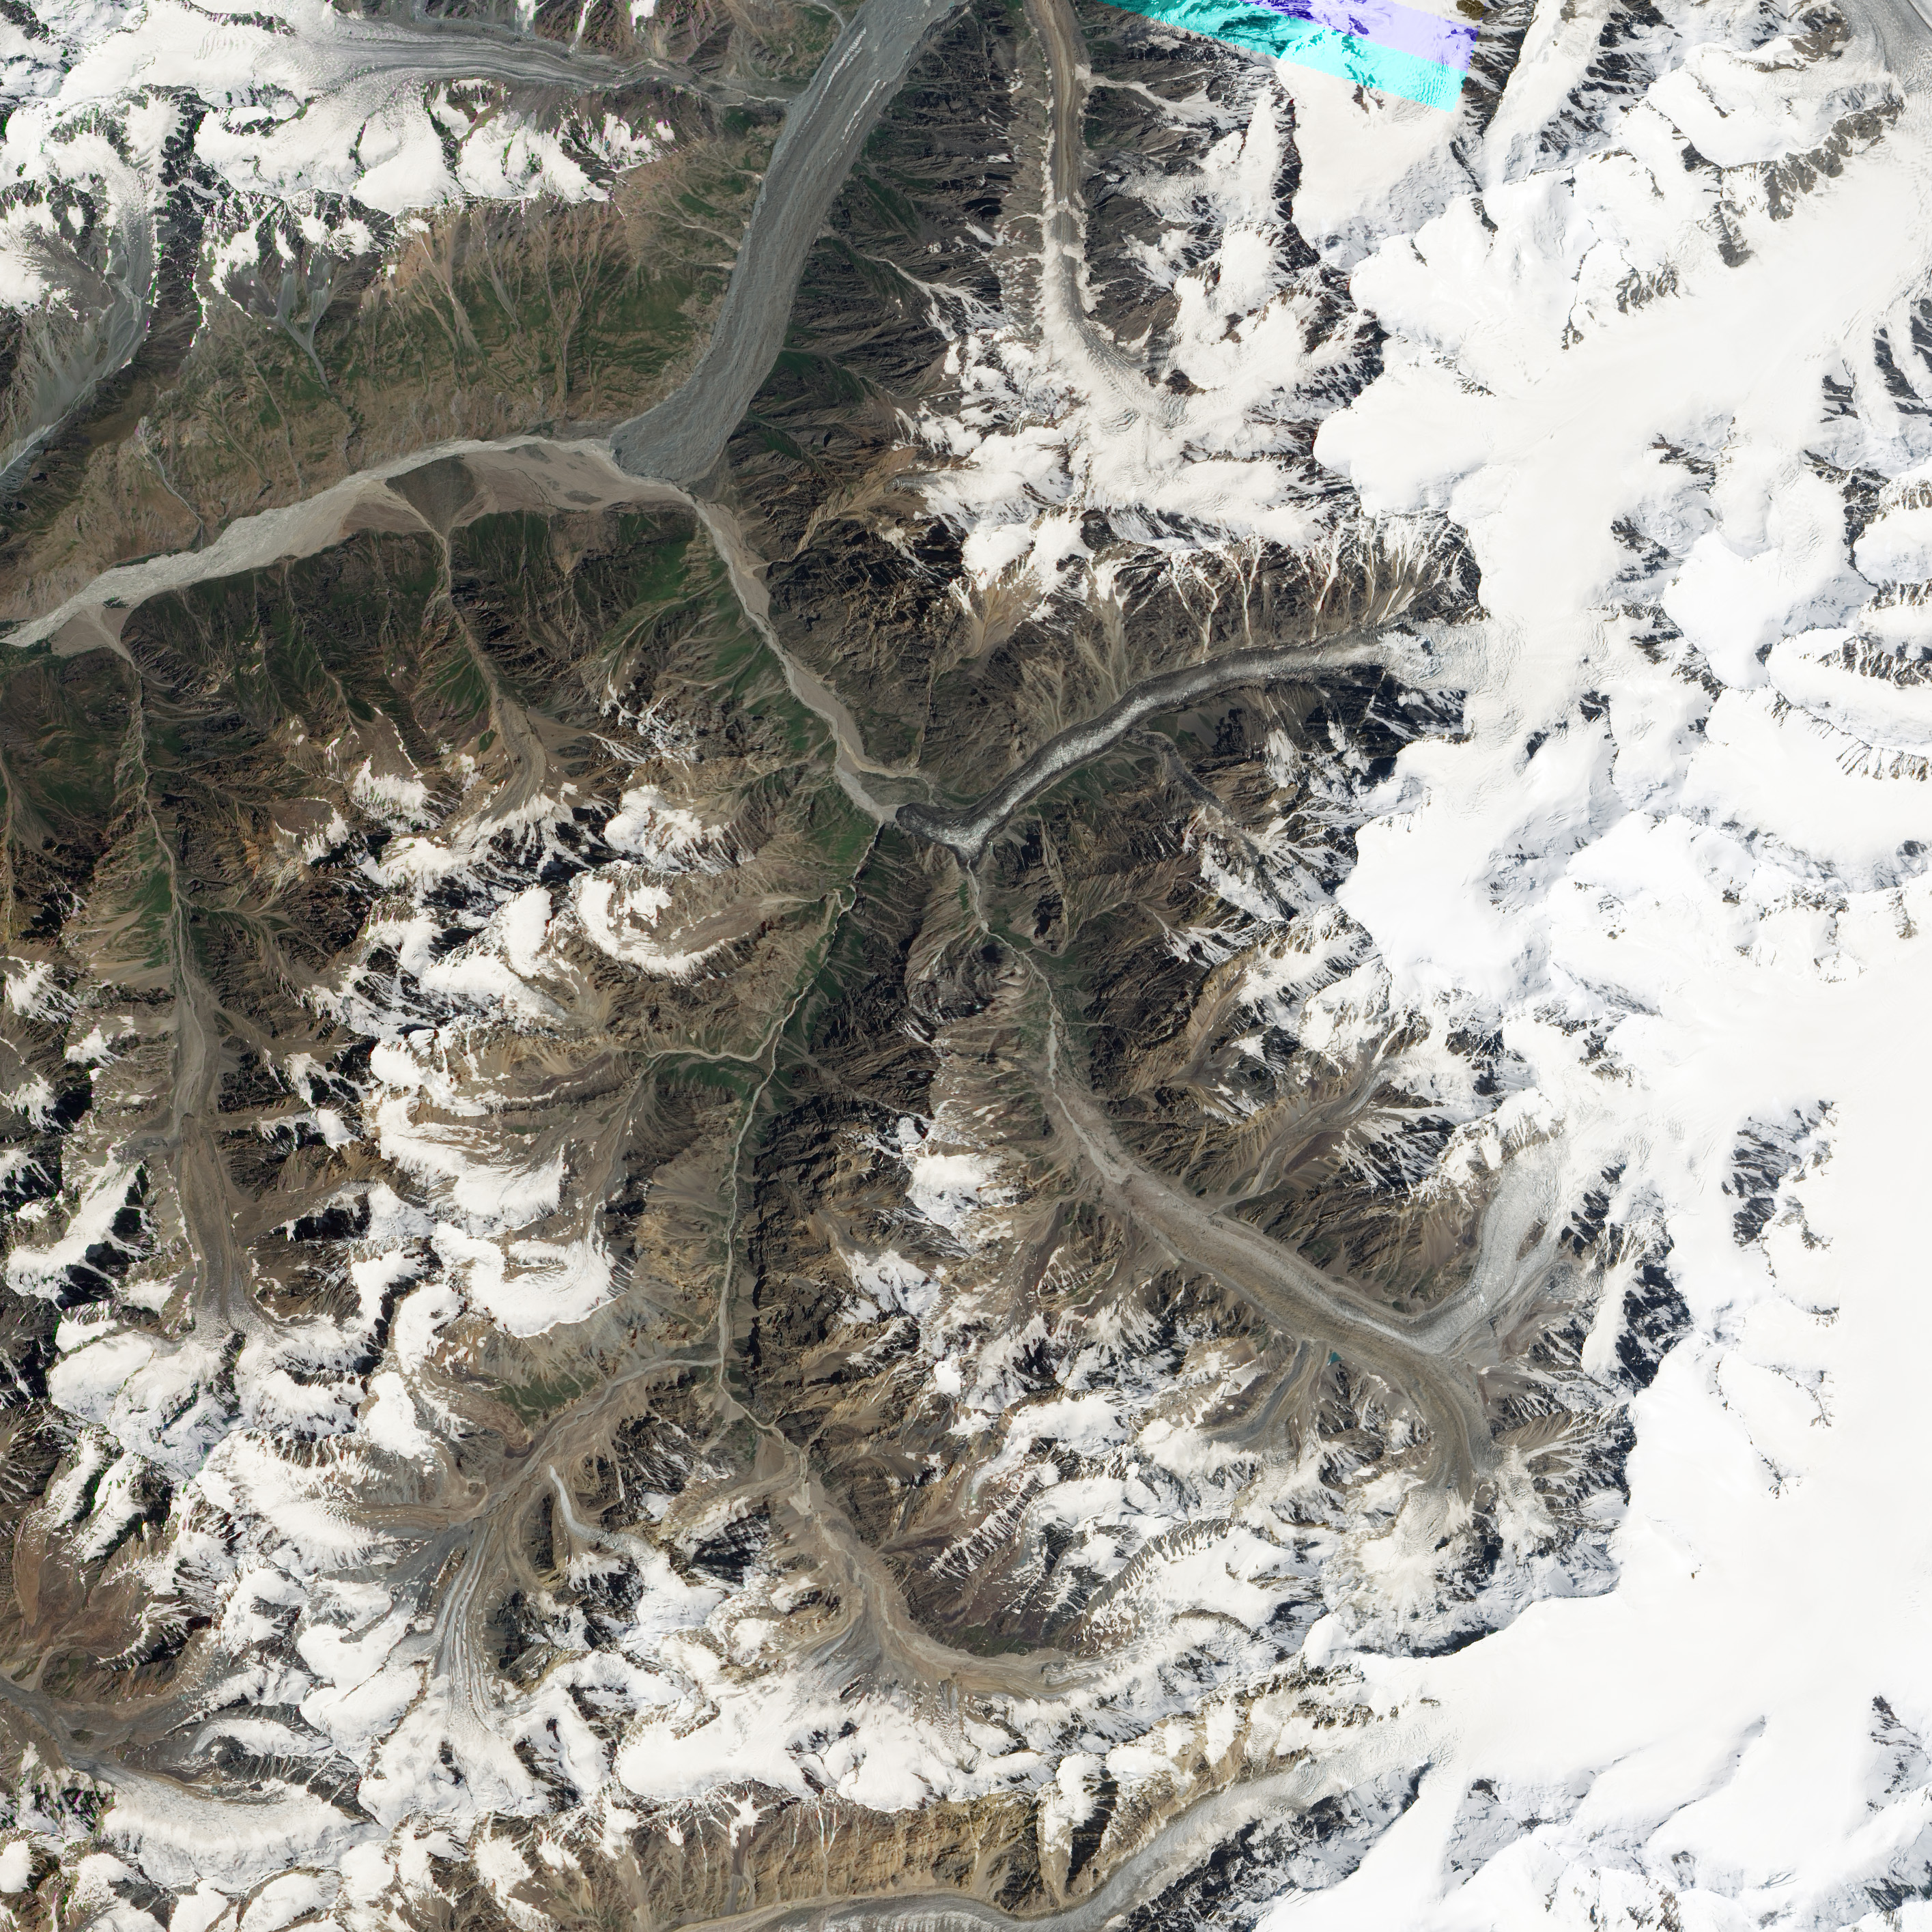 Medvezhiy Glacier Advances - related image preview